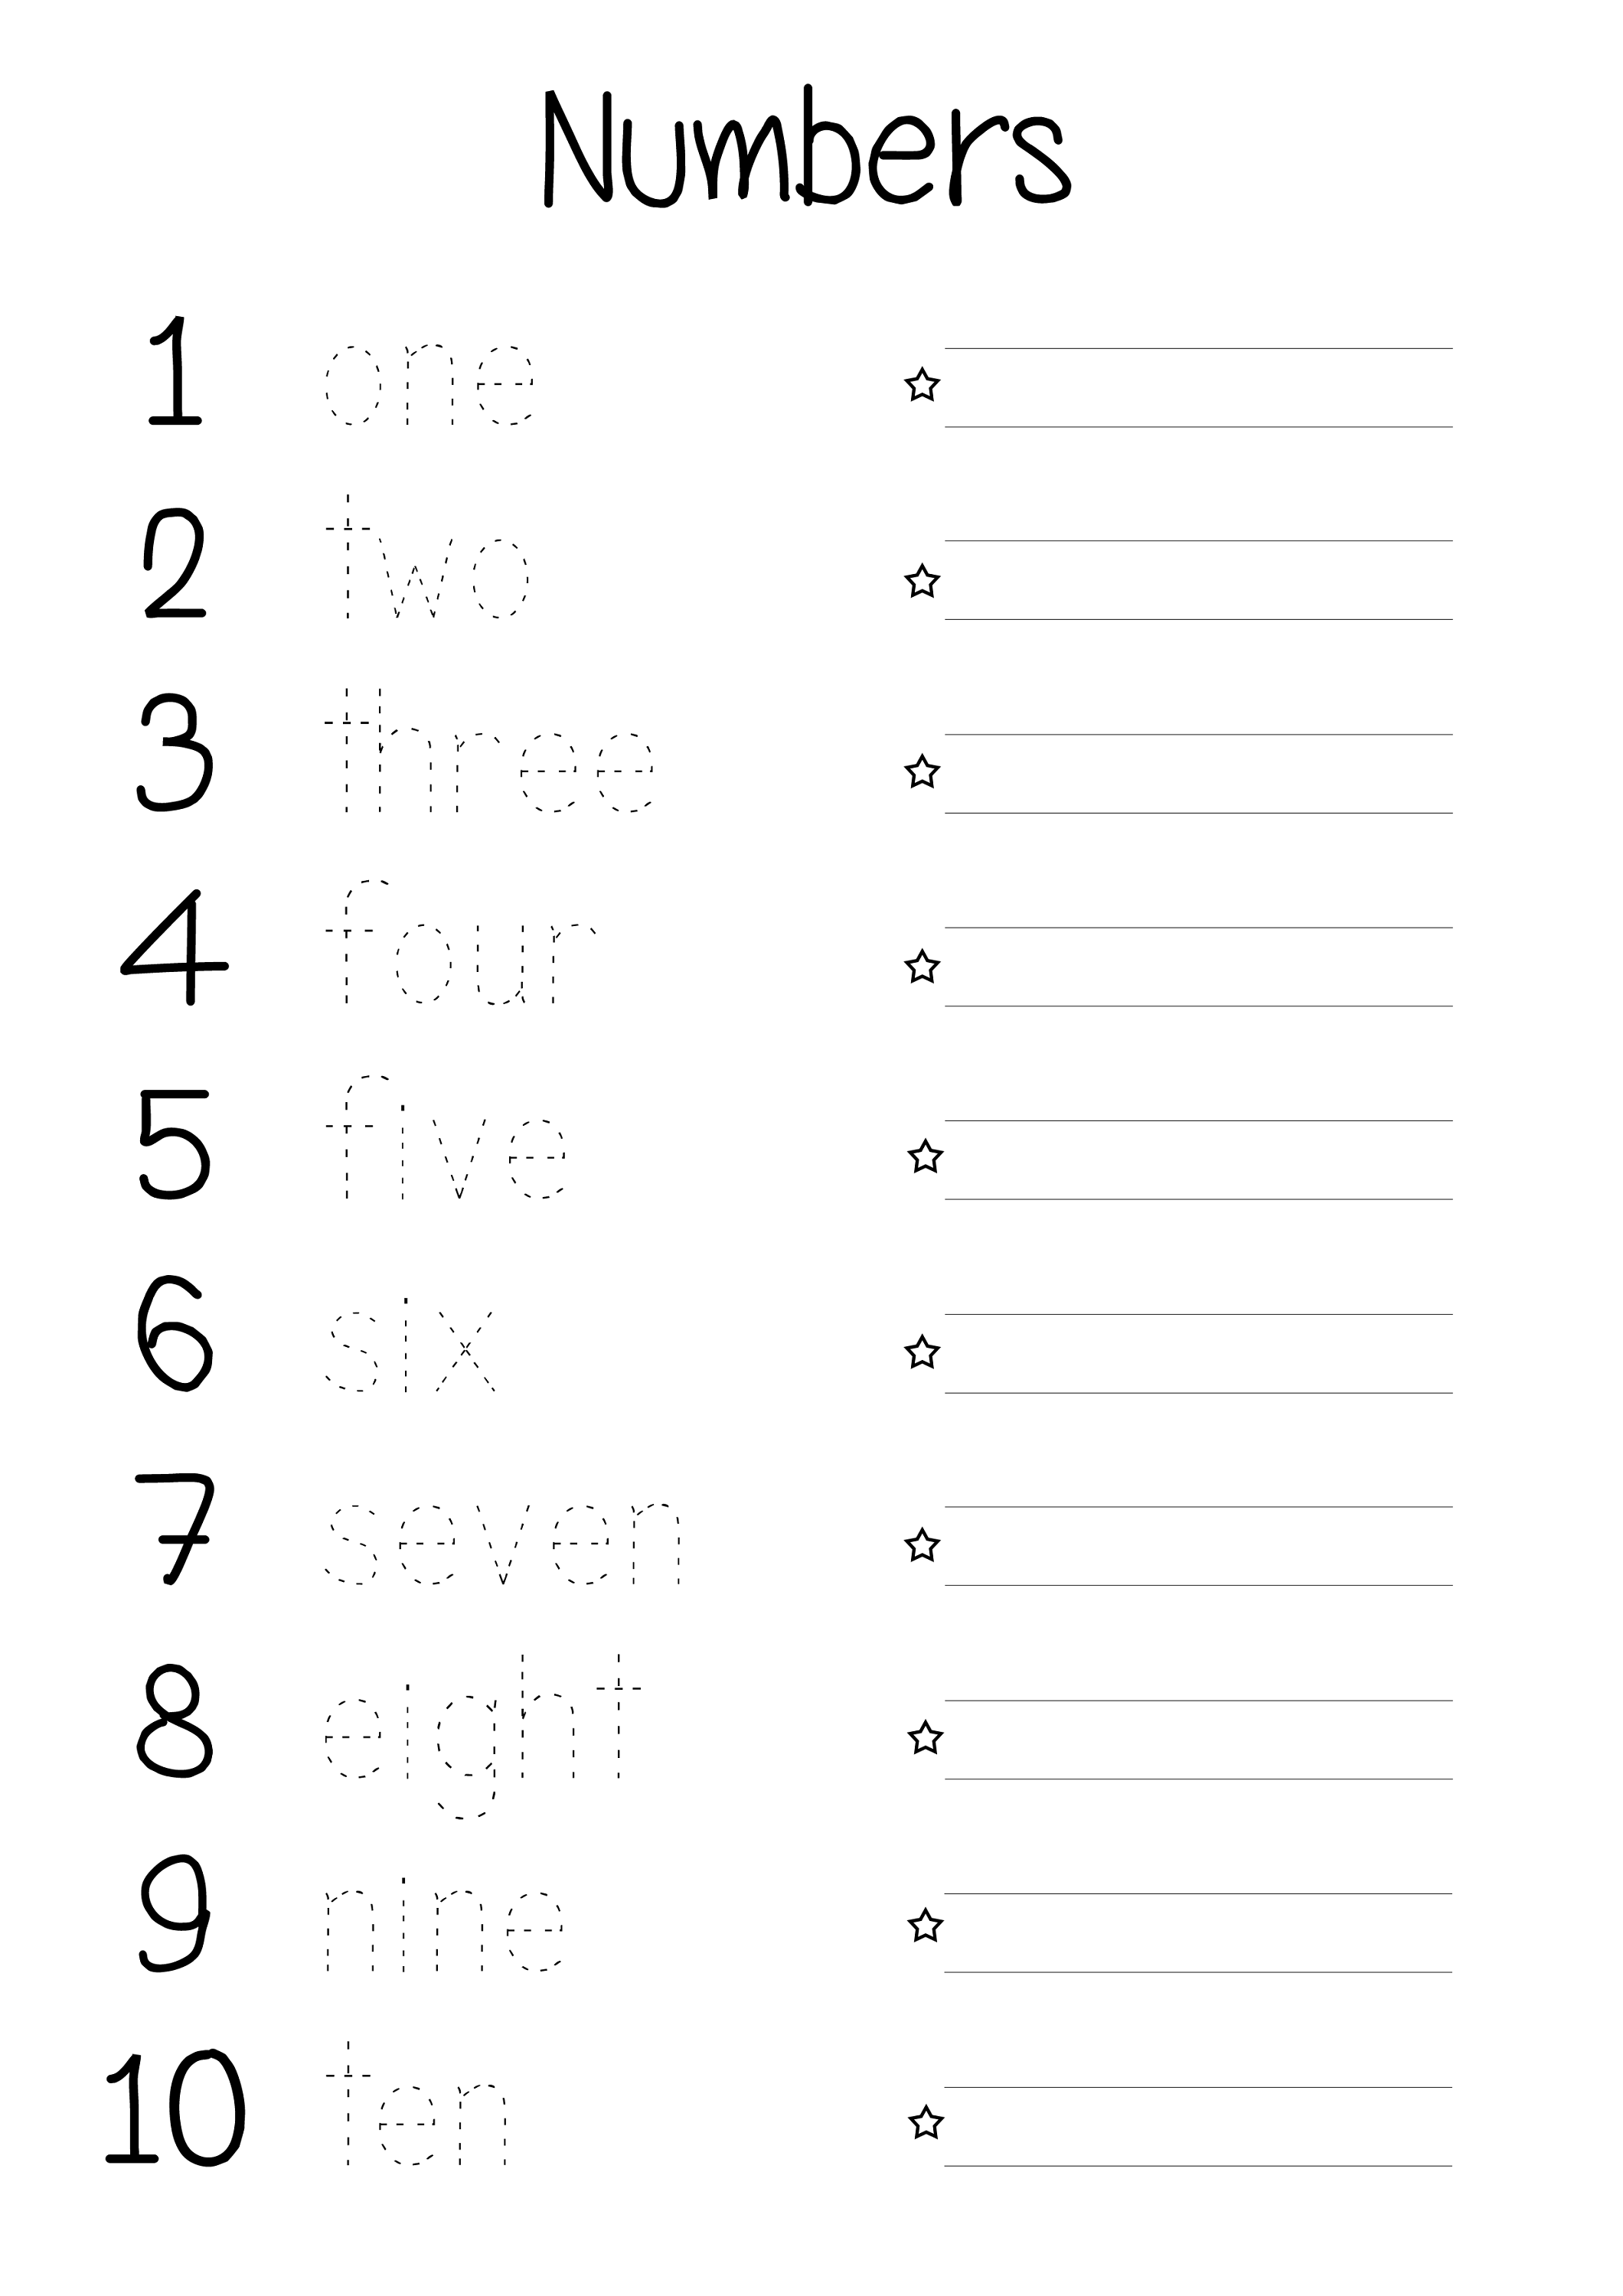 number-words-number-sense-printables-and-activities-numbers-0-10-kindergarten-number-writing